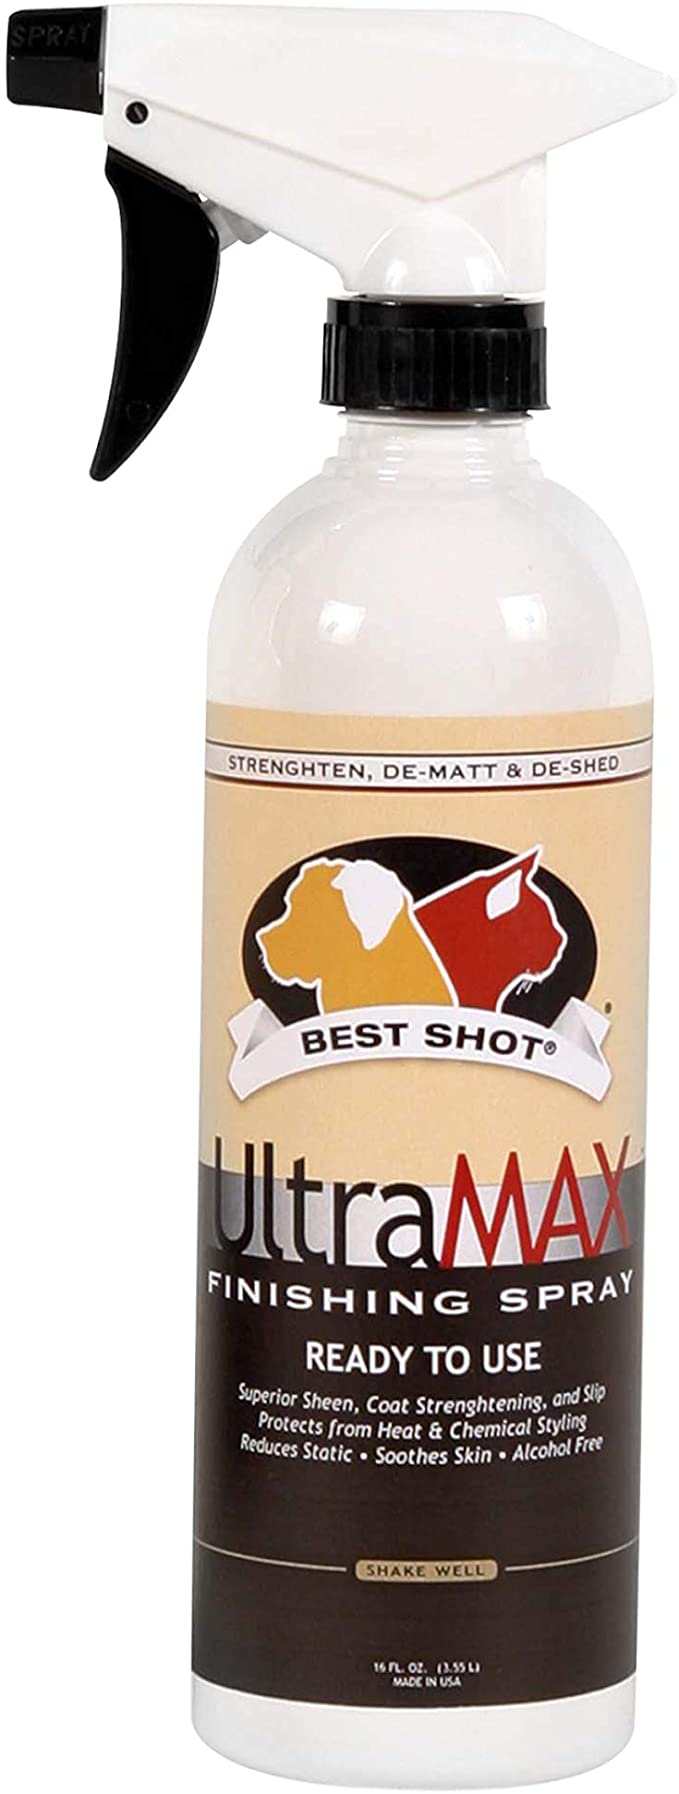 Best Shot Pet UltraMax Pro Finishing Spray